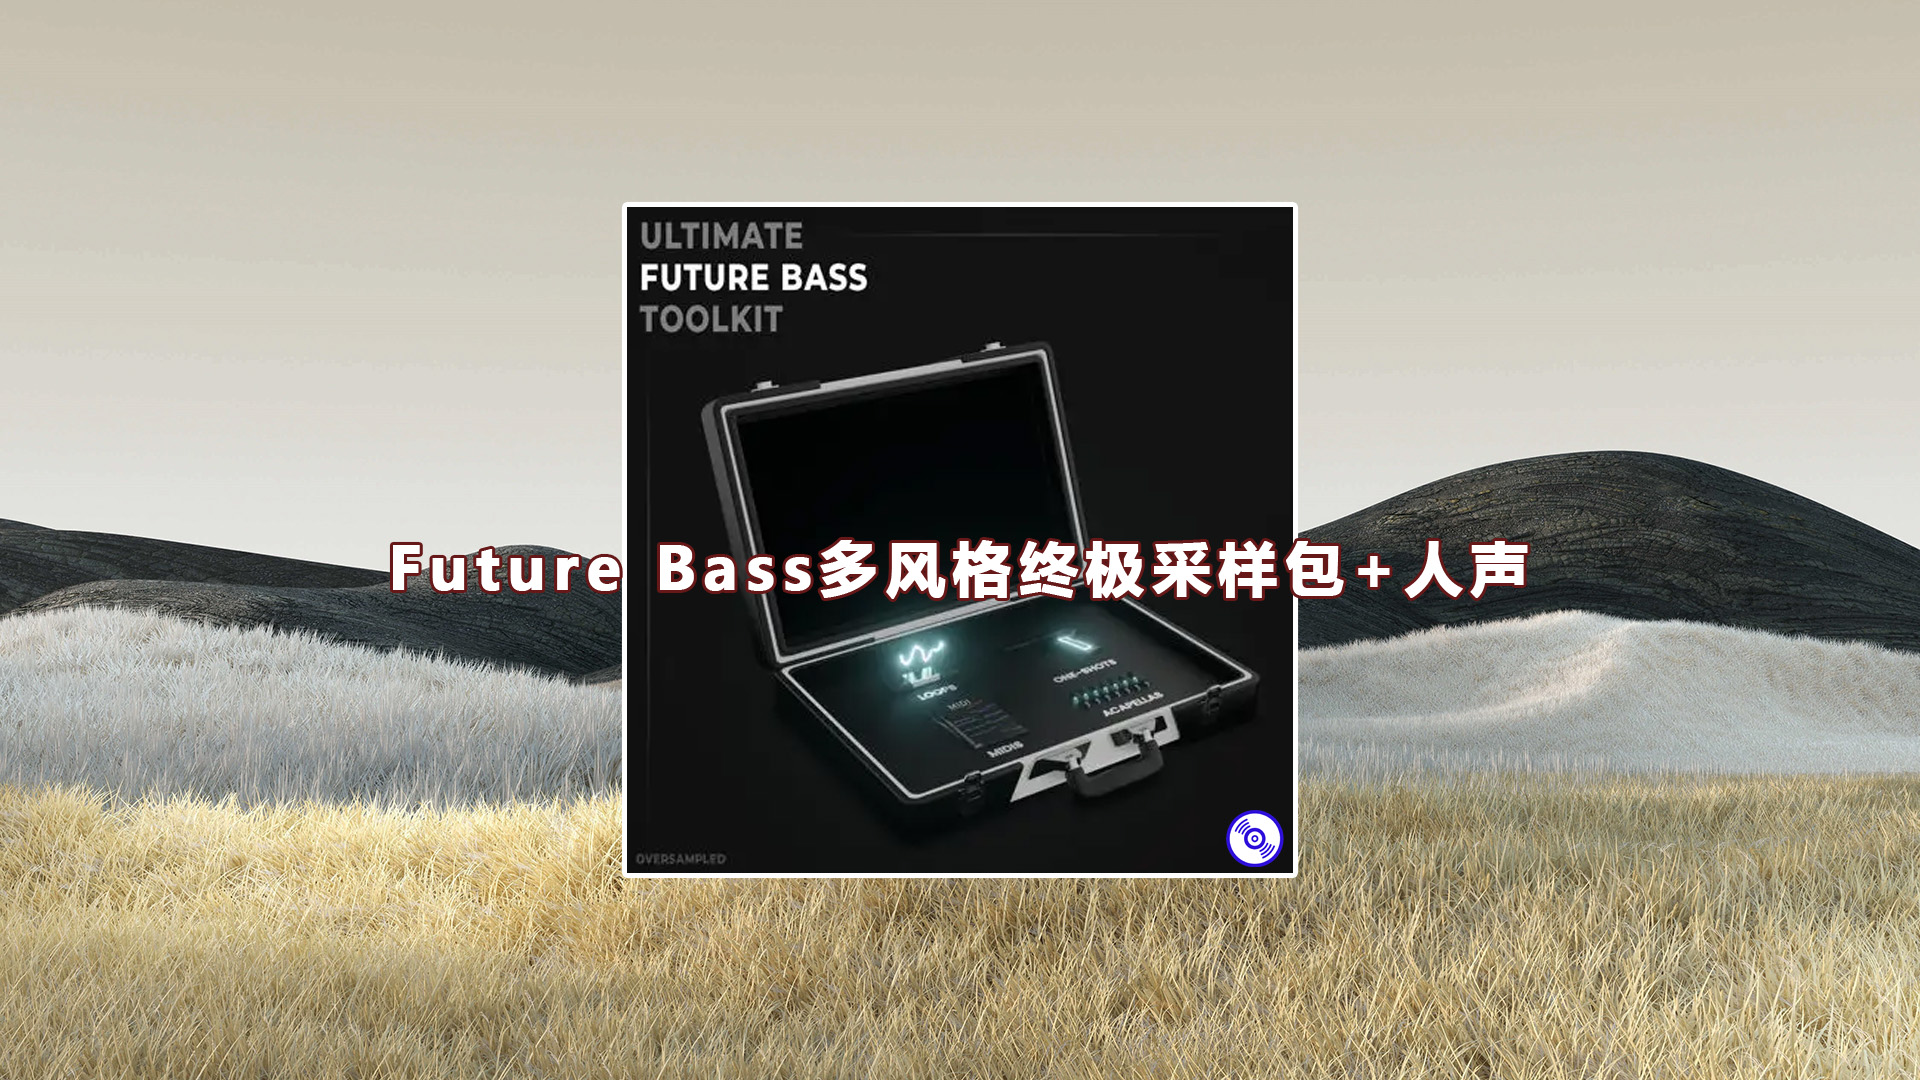 【Future Bass多风格终极采样包+人声】 Ultimate Future Bass Toolkit